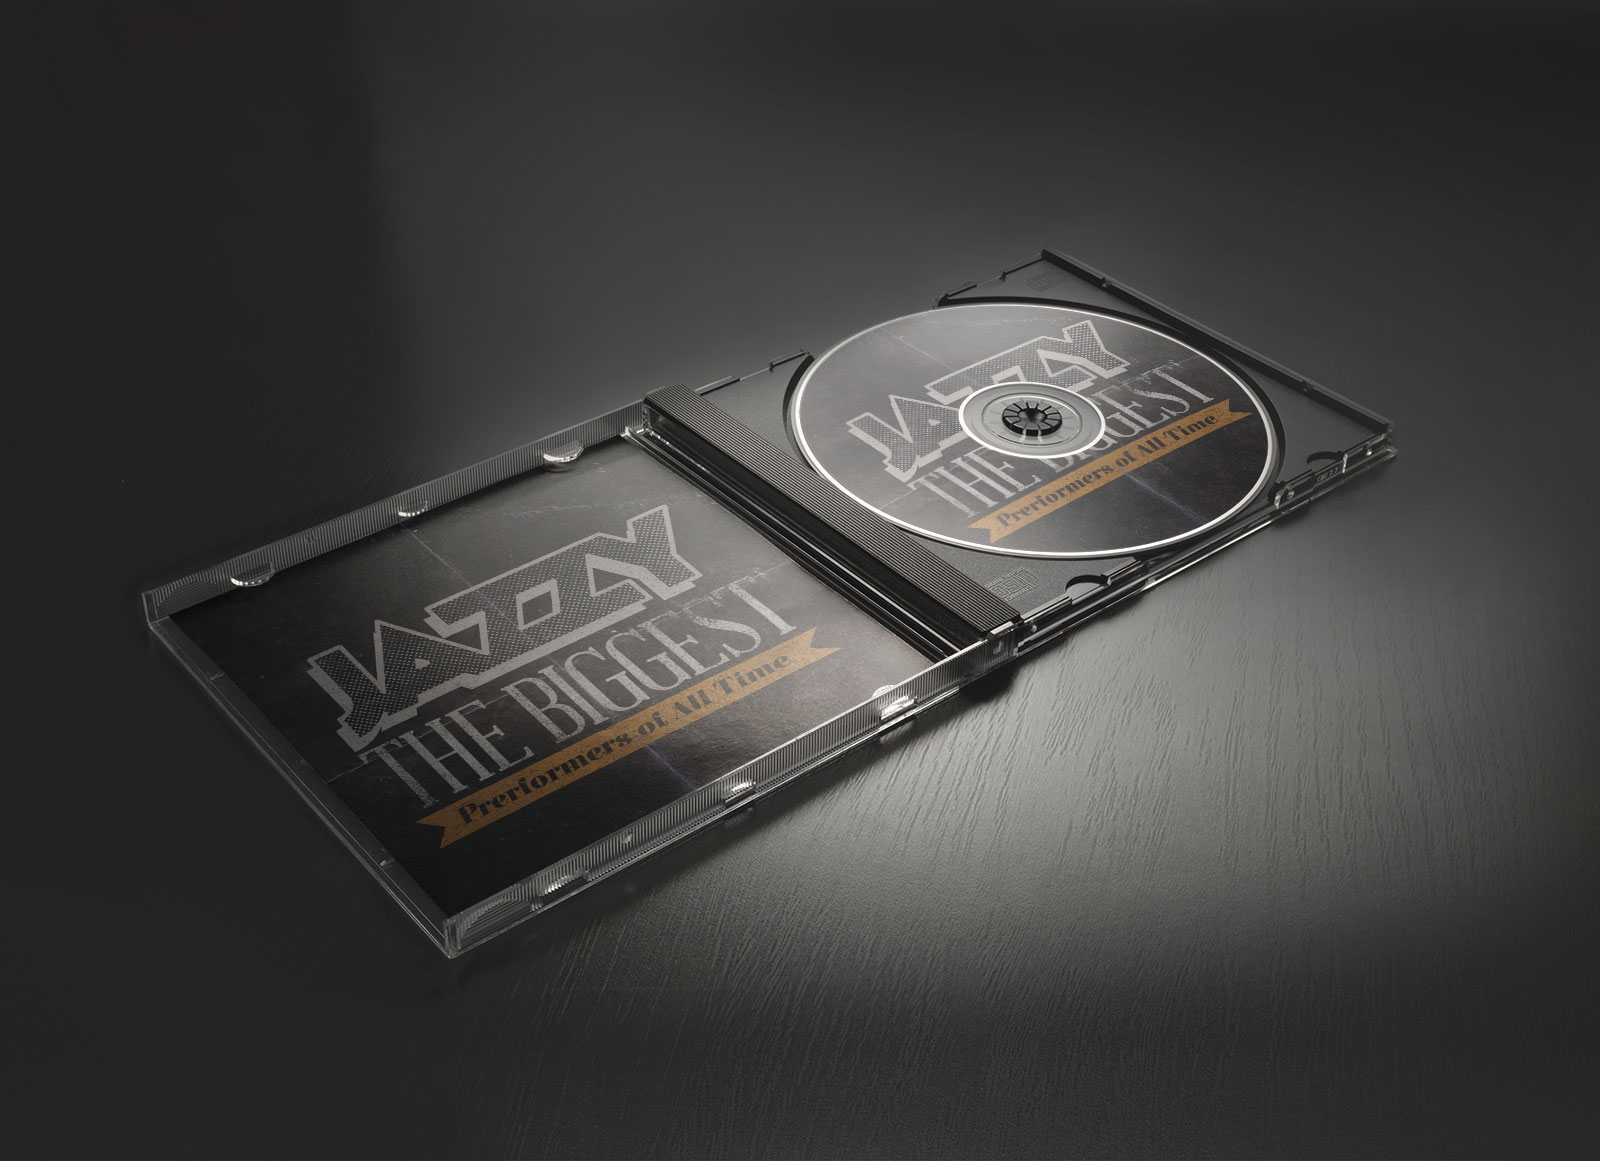 Free-CD-DVD-Jewel-Case-Mockup-PSD